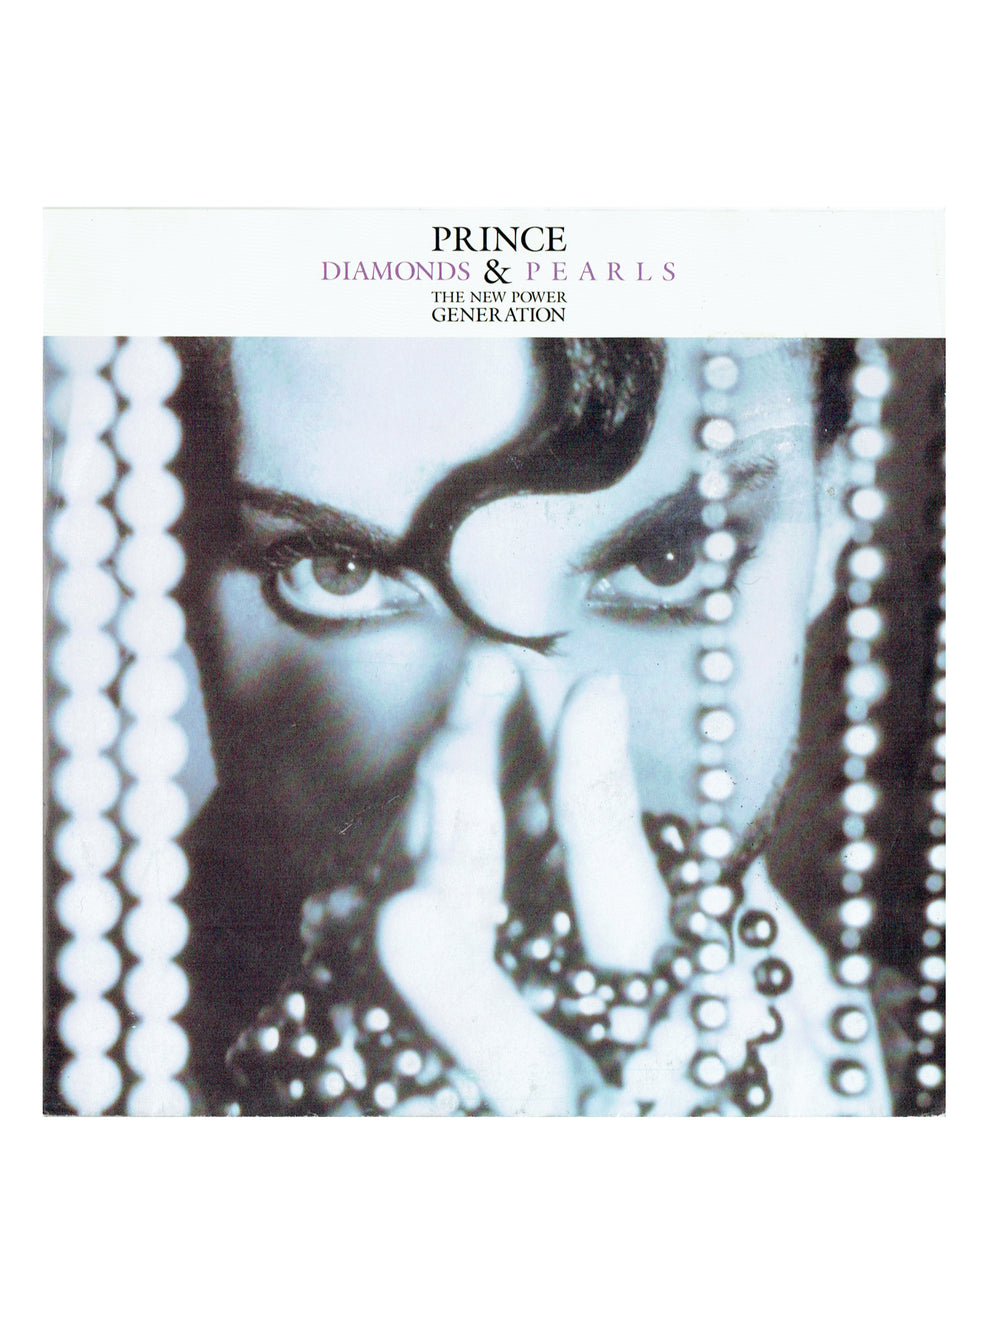 Prince Diamonds & Pearls 7 Inch Single PS Release 1991 W0075 MRM